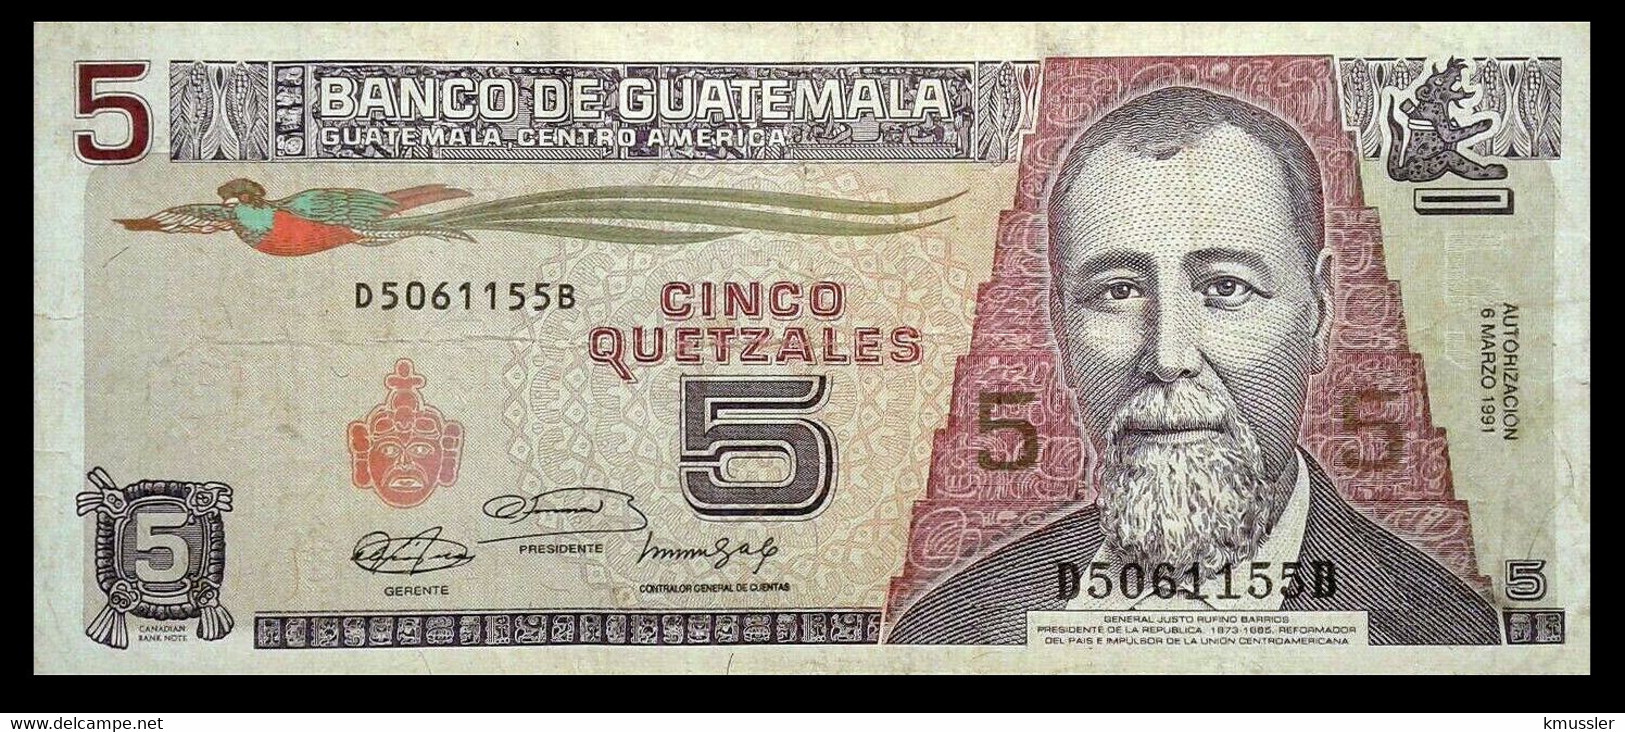 # # # Banknote Aus Guatemala 5 Quetzales 1991 # # # - Guatemala